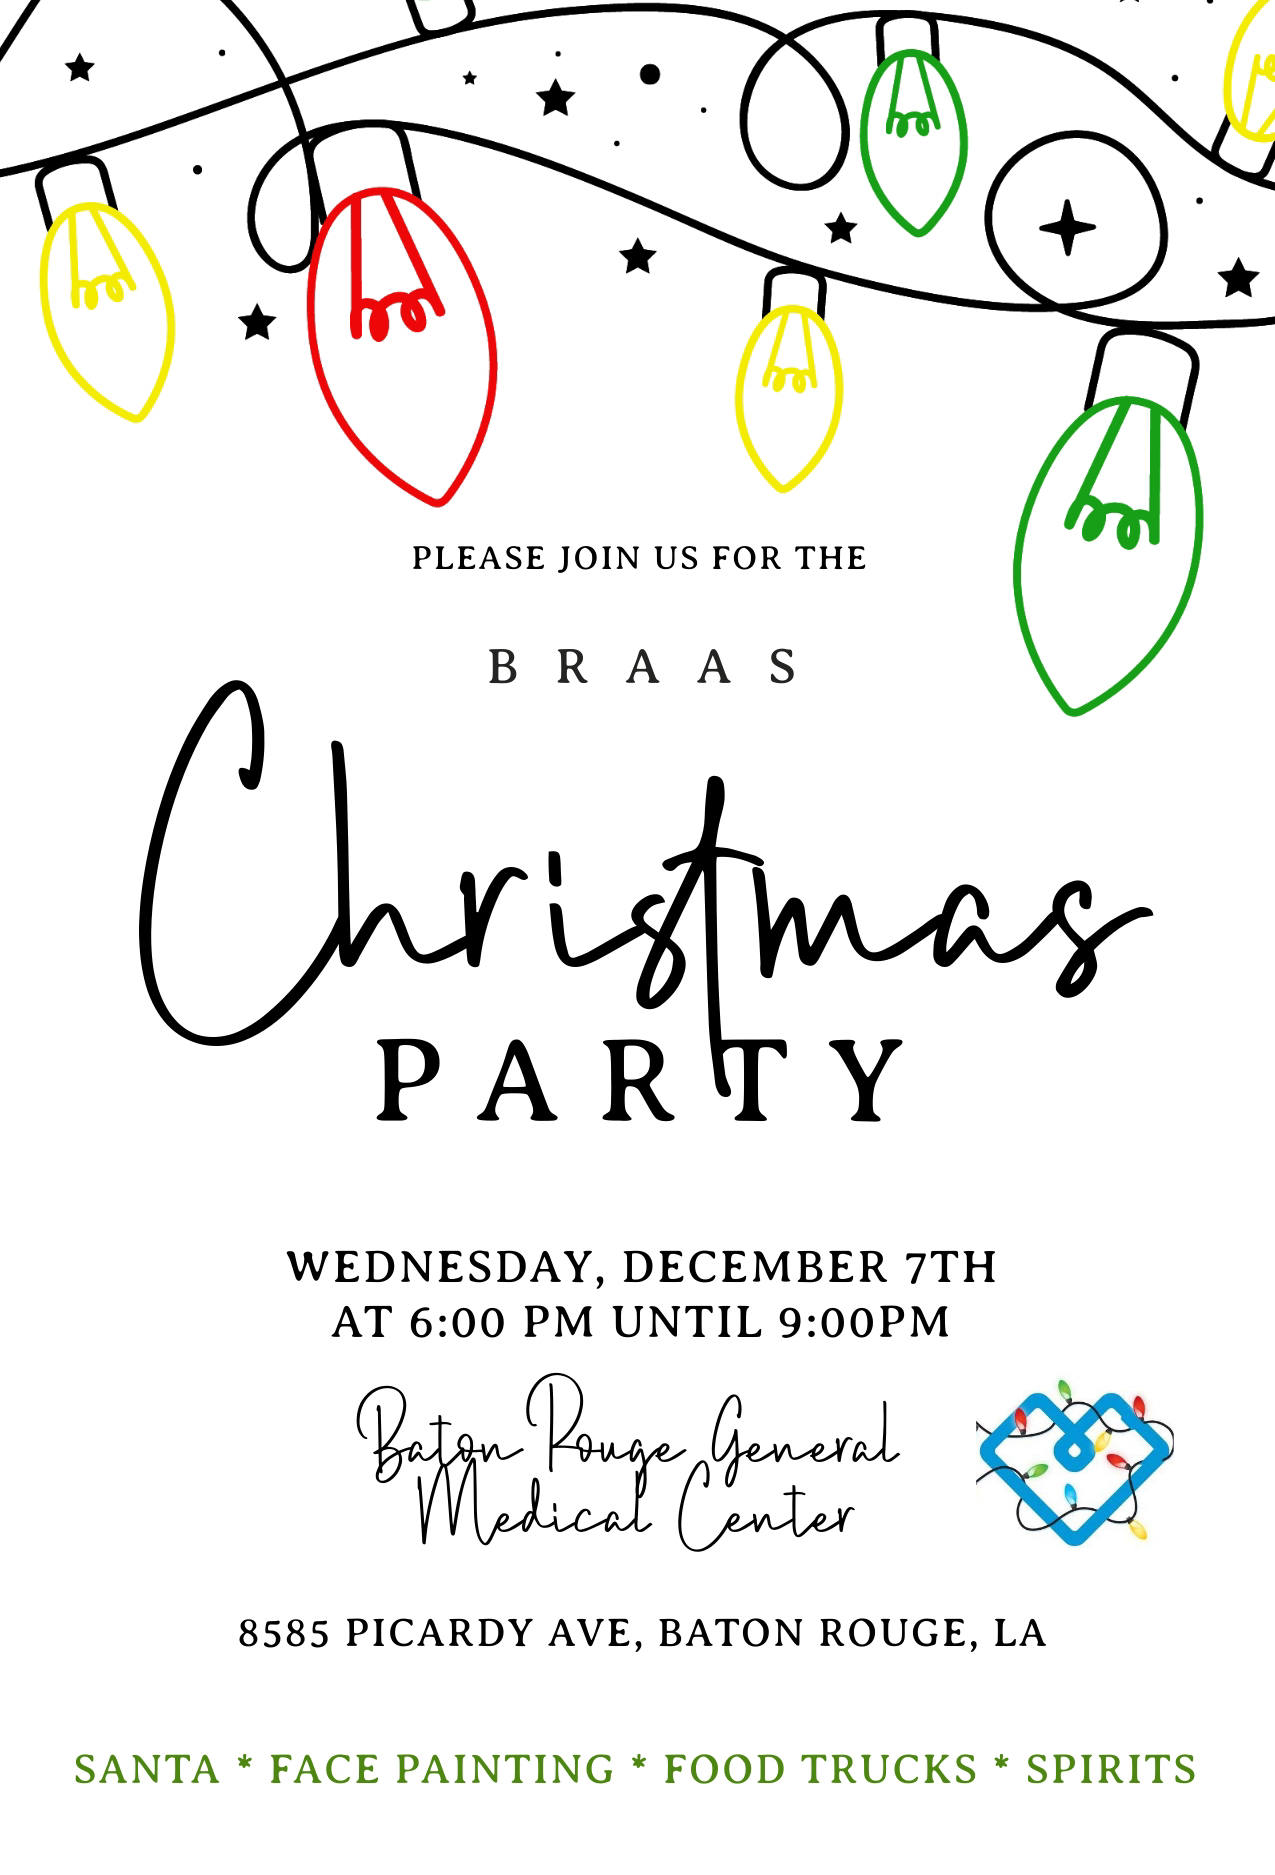 BRAAS CHRISTMAS PARTY INFO! – BRAAS